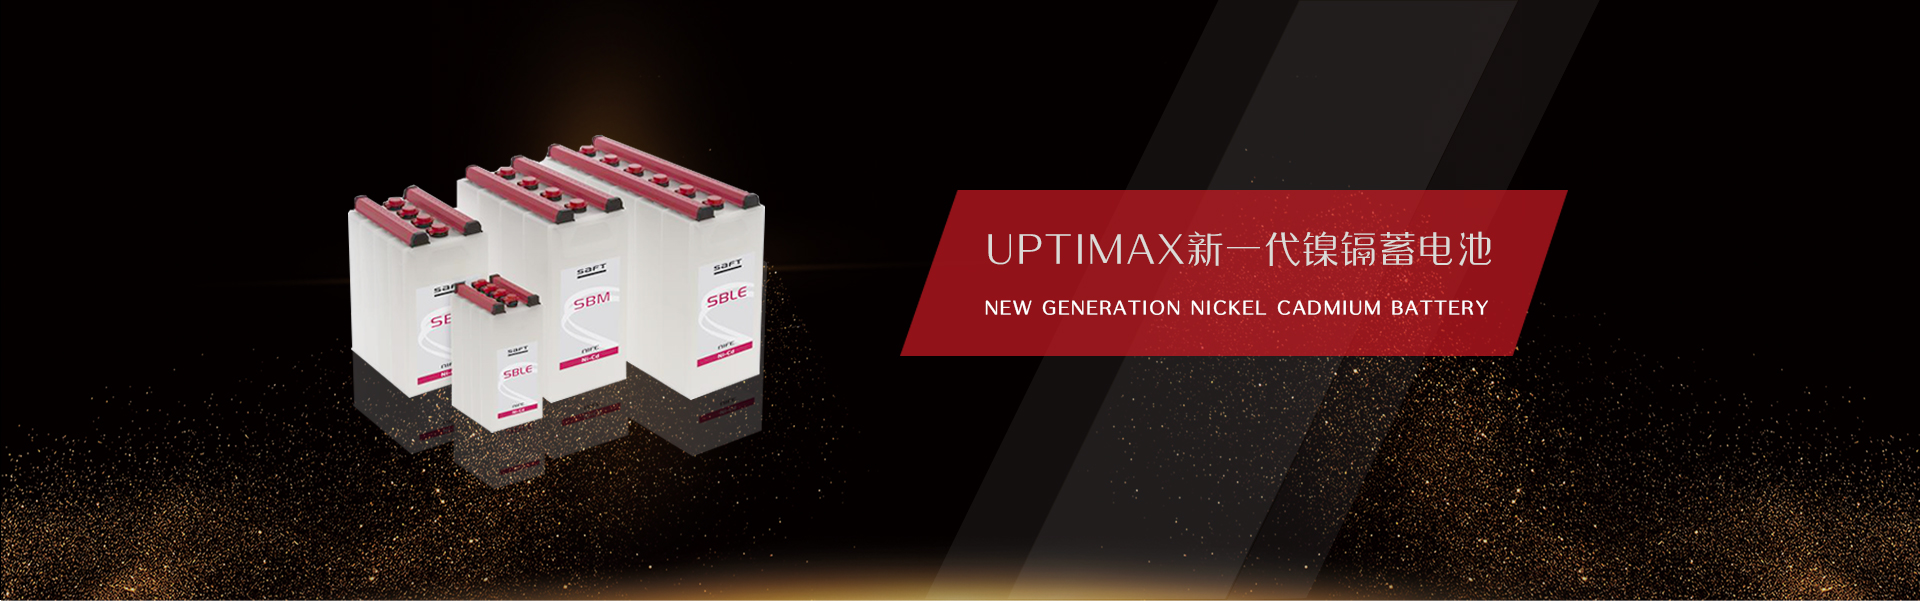 Uptimax新一代镍镉蓄电池